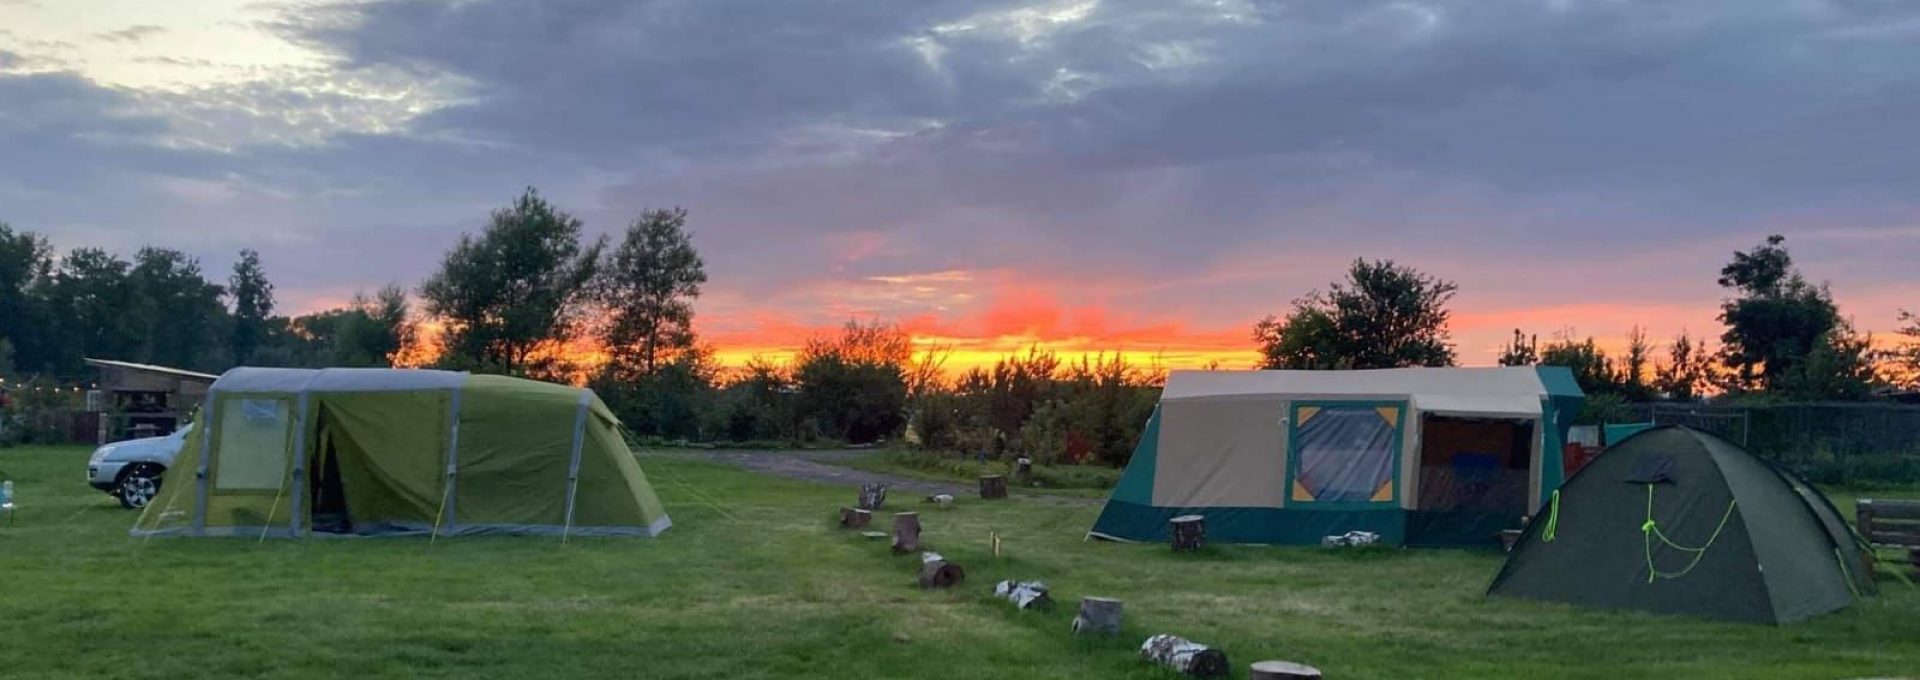 Bobs Field Camping